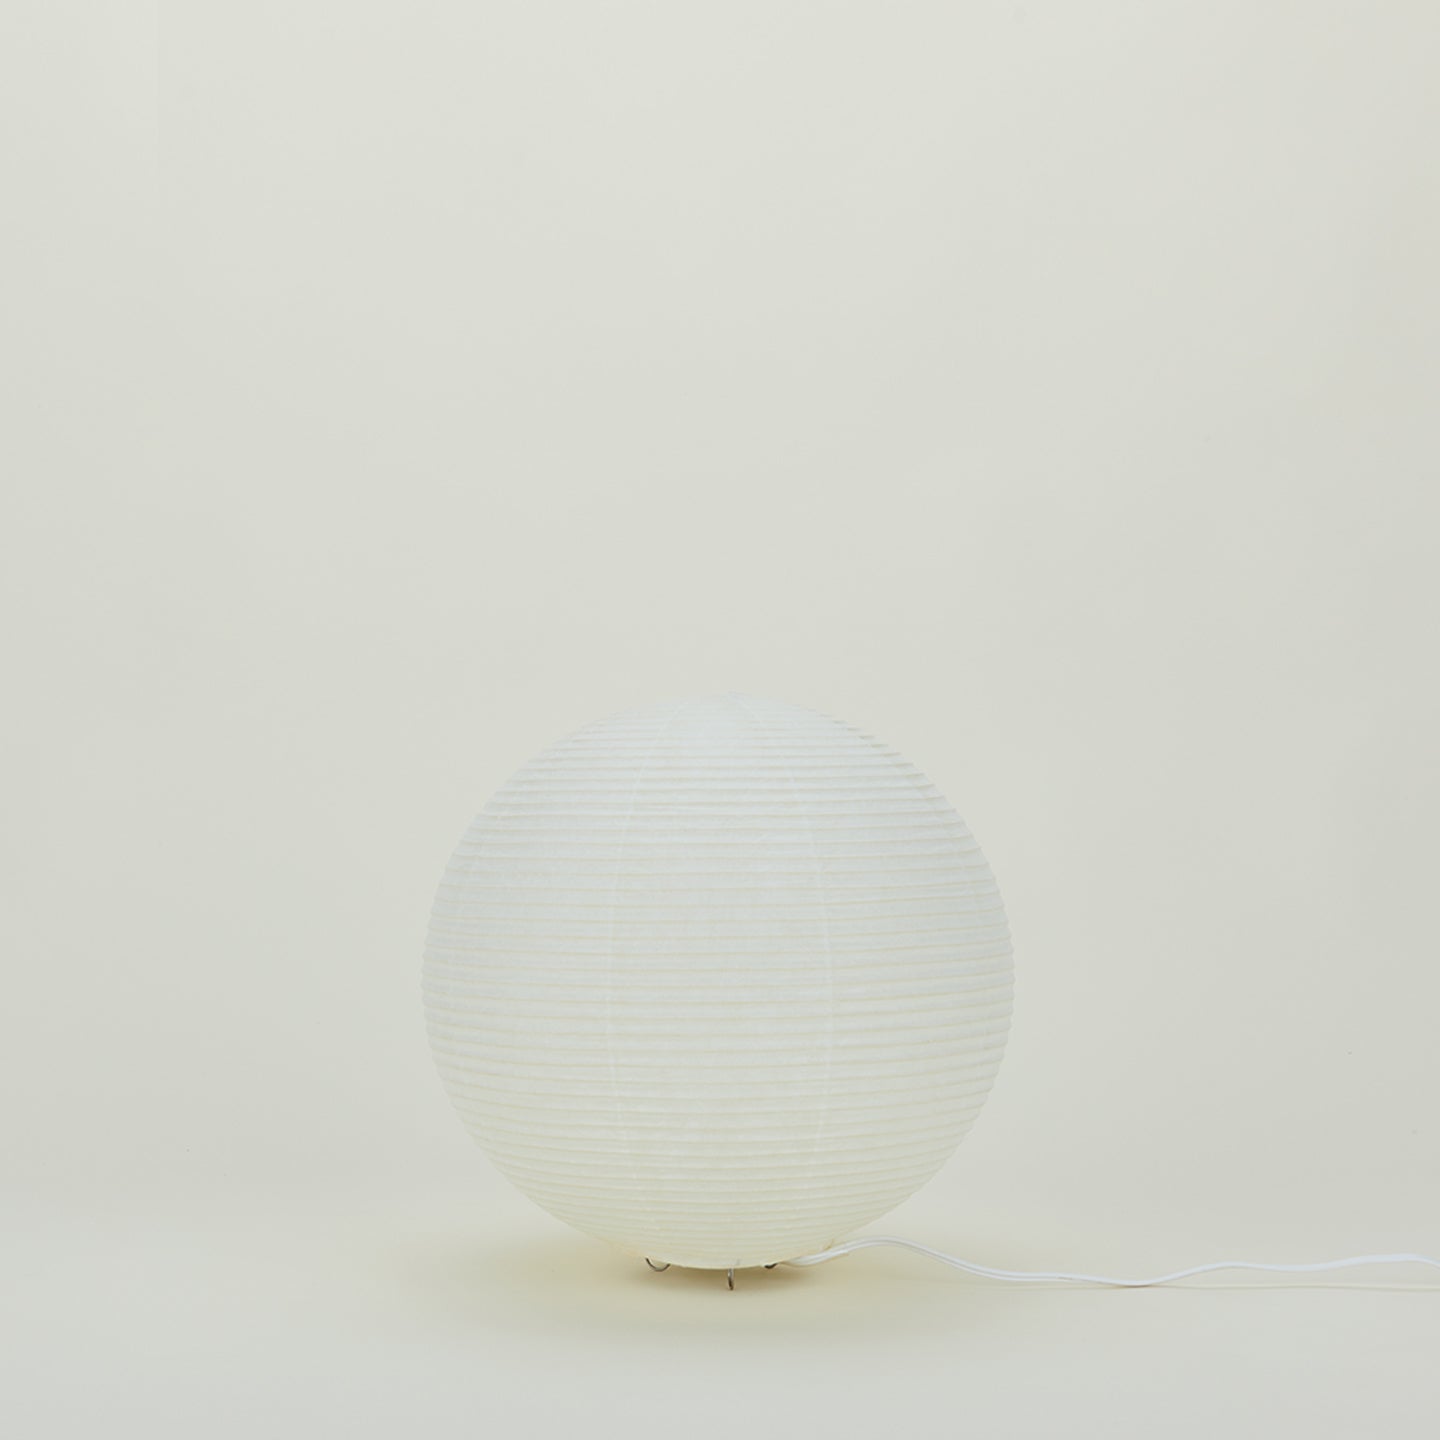 Asano Paper Moon - Sphere